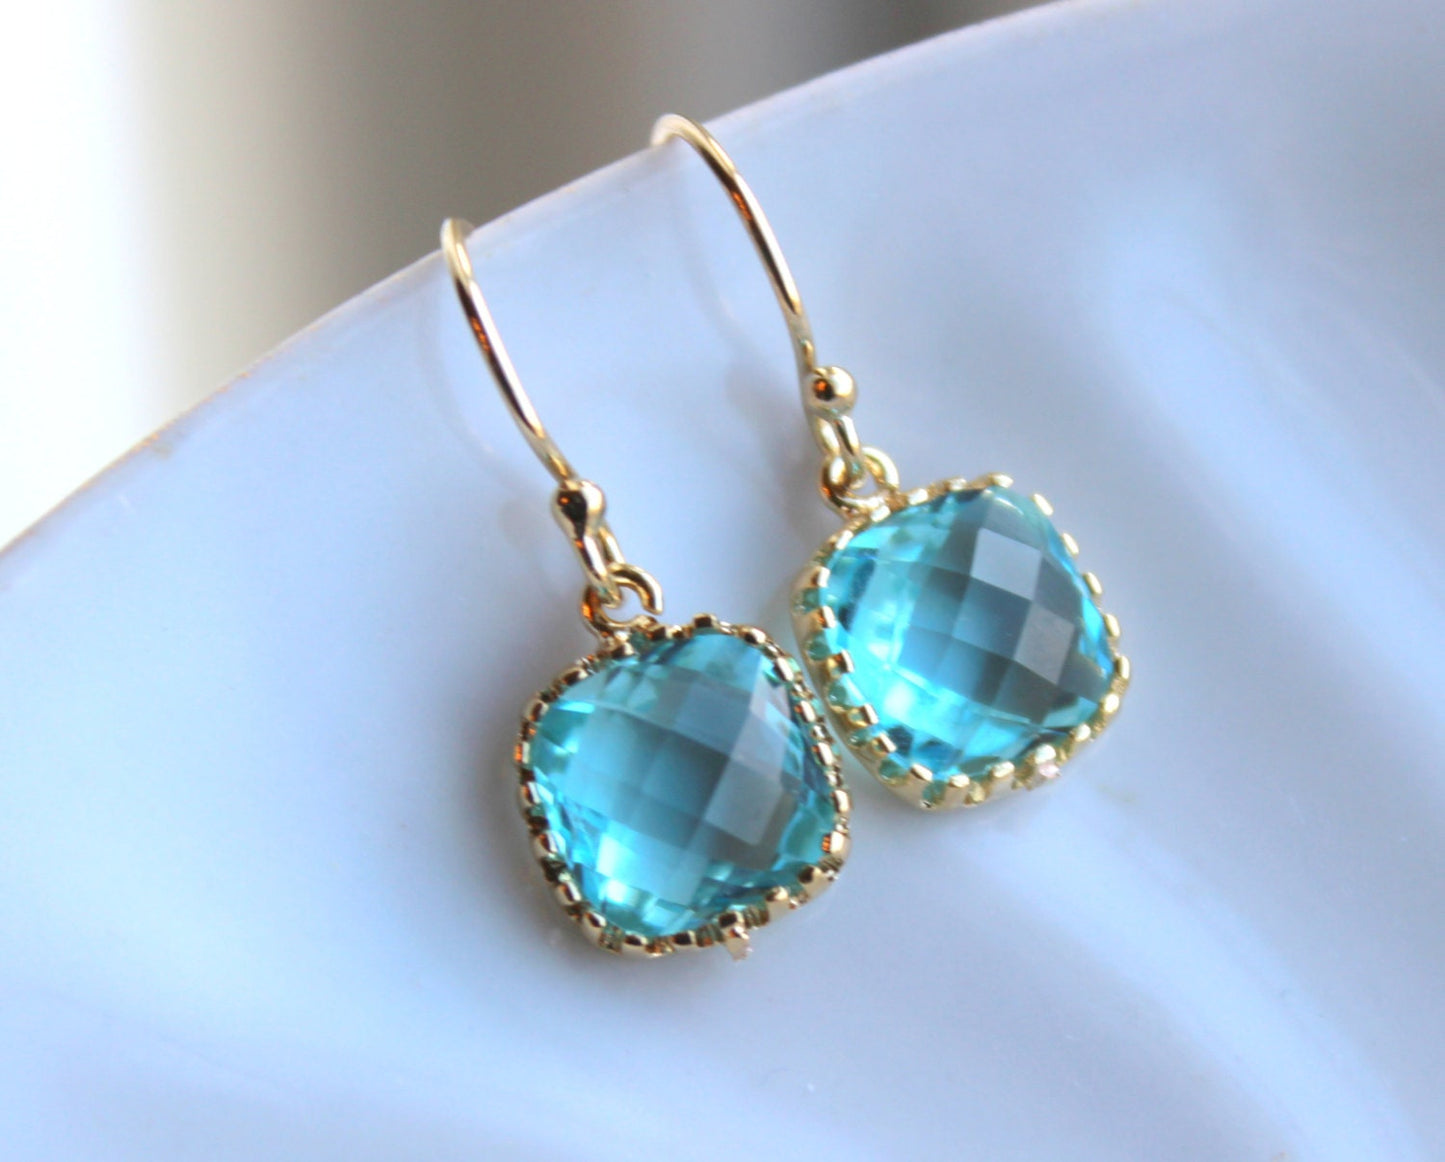 Dainty Aquamarine Topaz Blue Earrings Gold Plated - Aqua Bridesmaid Earrings - Wedding Earrings Aquamarine Wedding Jewelry - Bridal Earrings